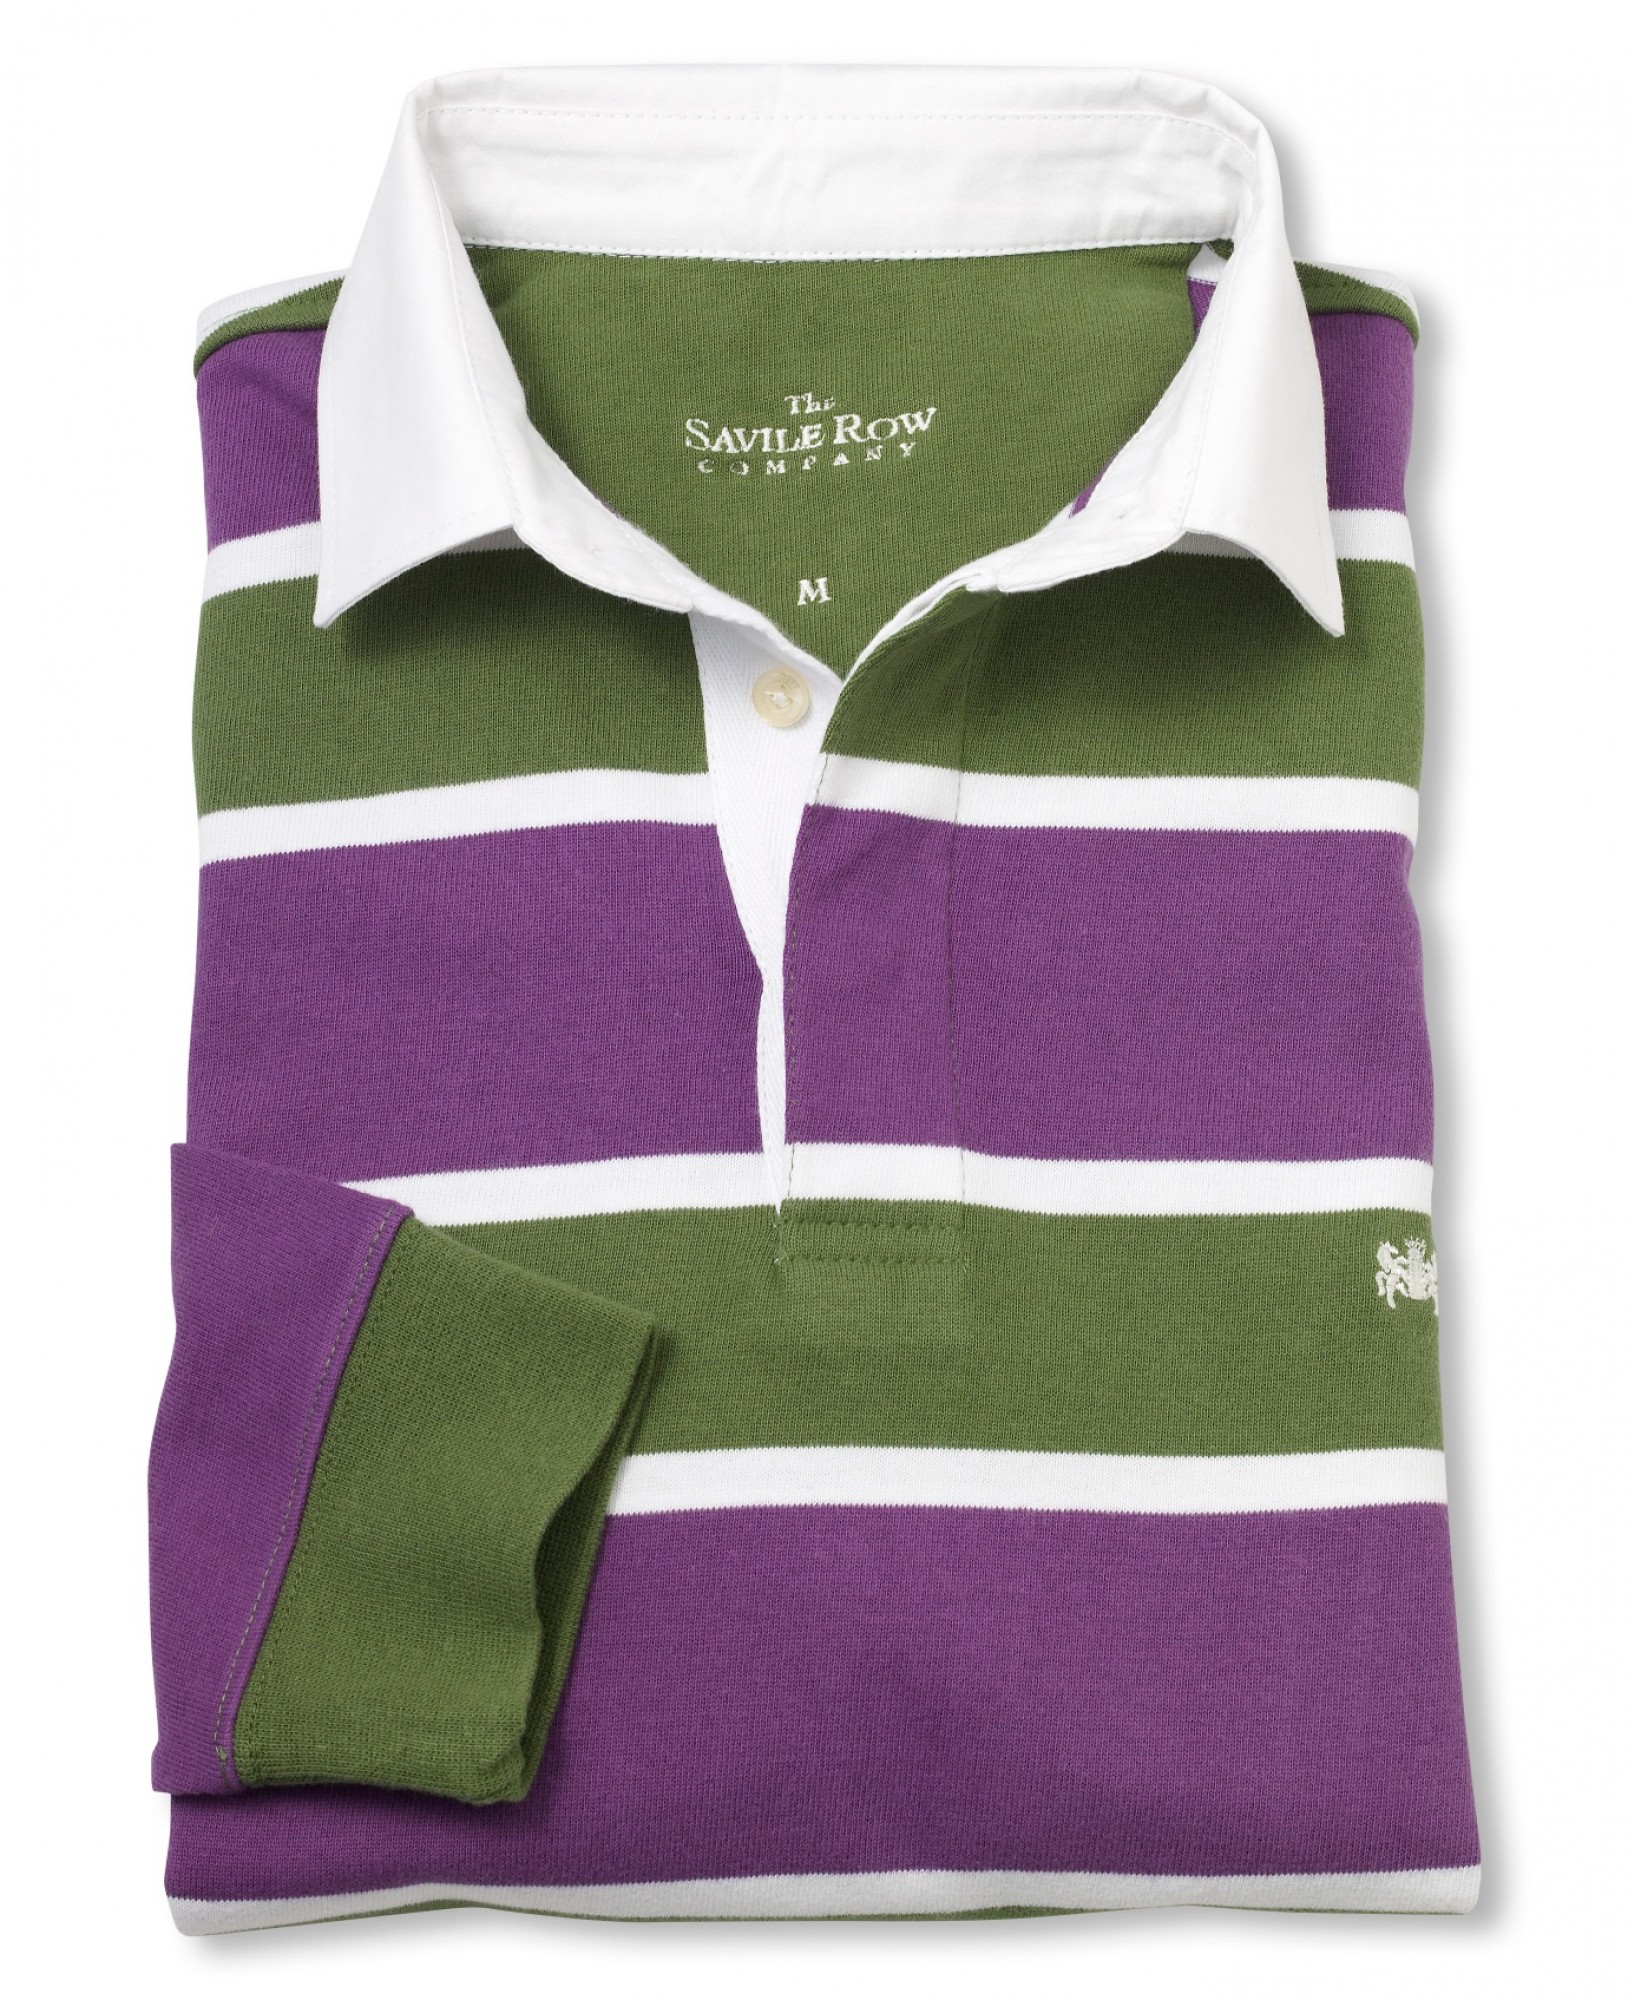 Savile Row Co. Purple White Green Stripe Rugby Shirt L